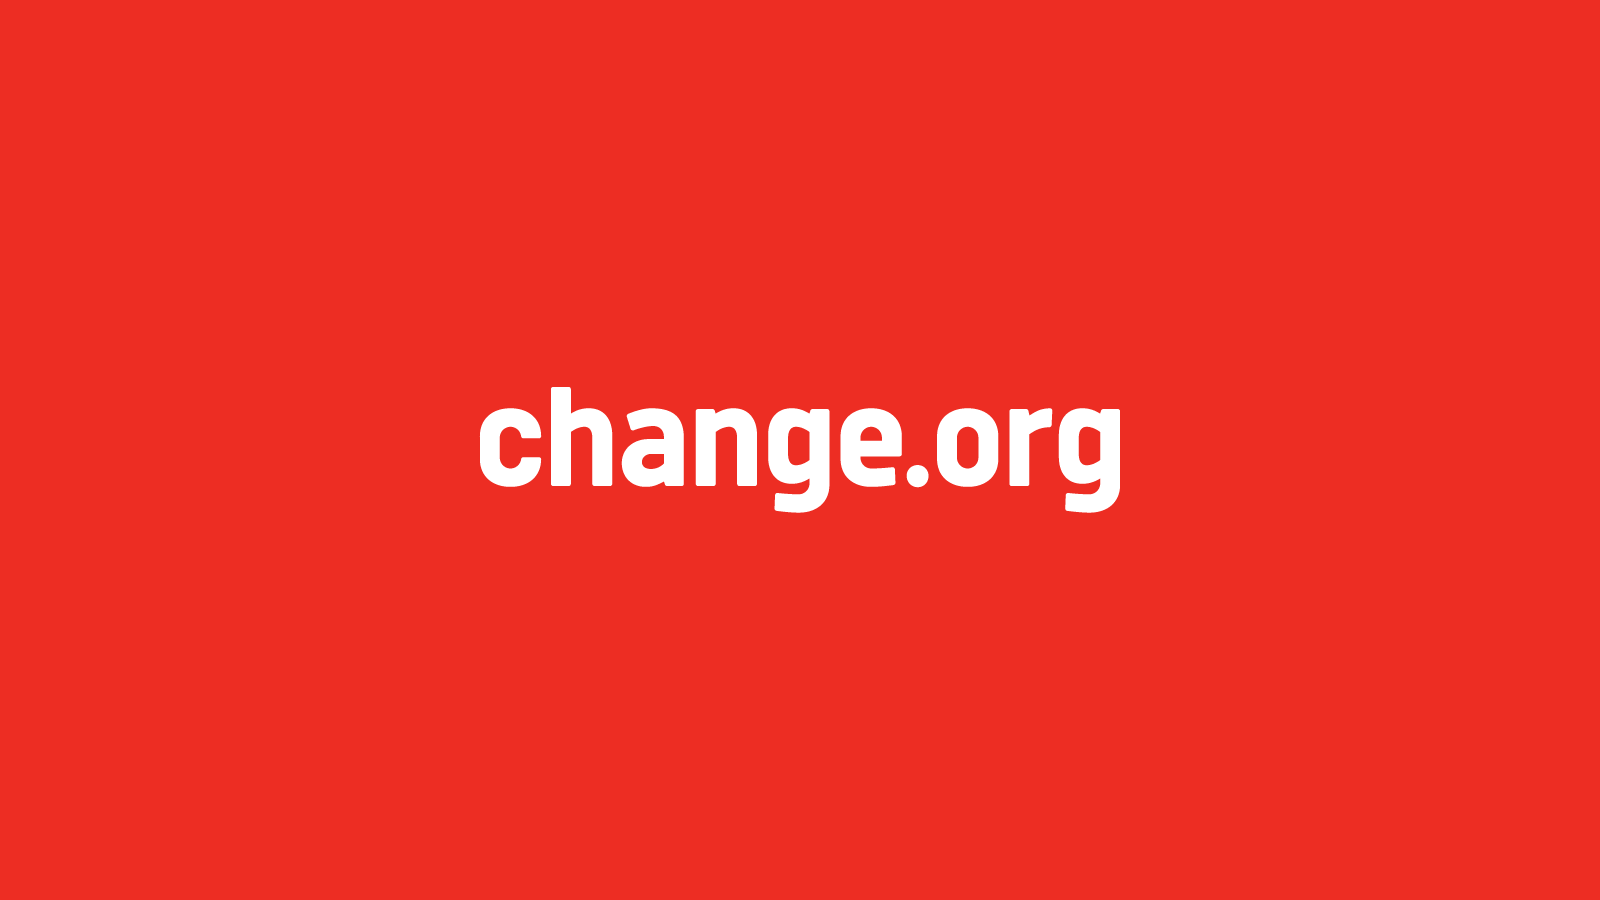 22-03-2022, 16:19 1. На сайте петиций Change.org усилили меры безопасности ...